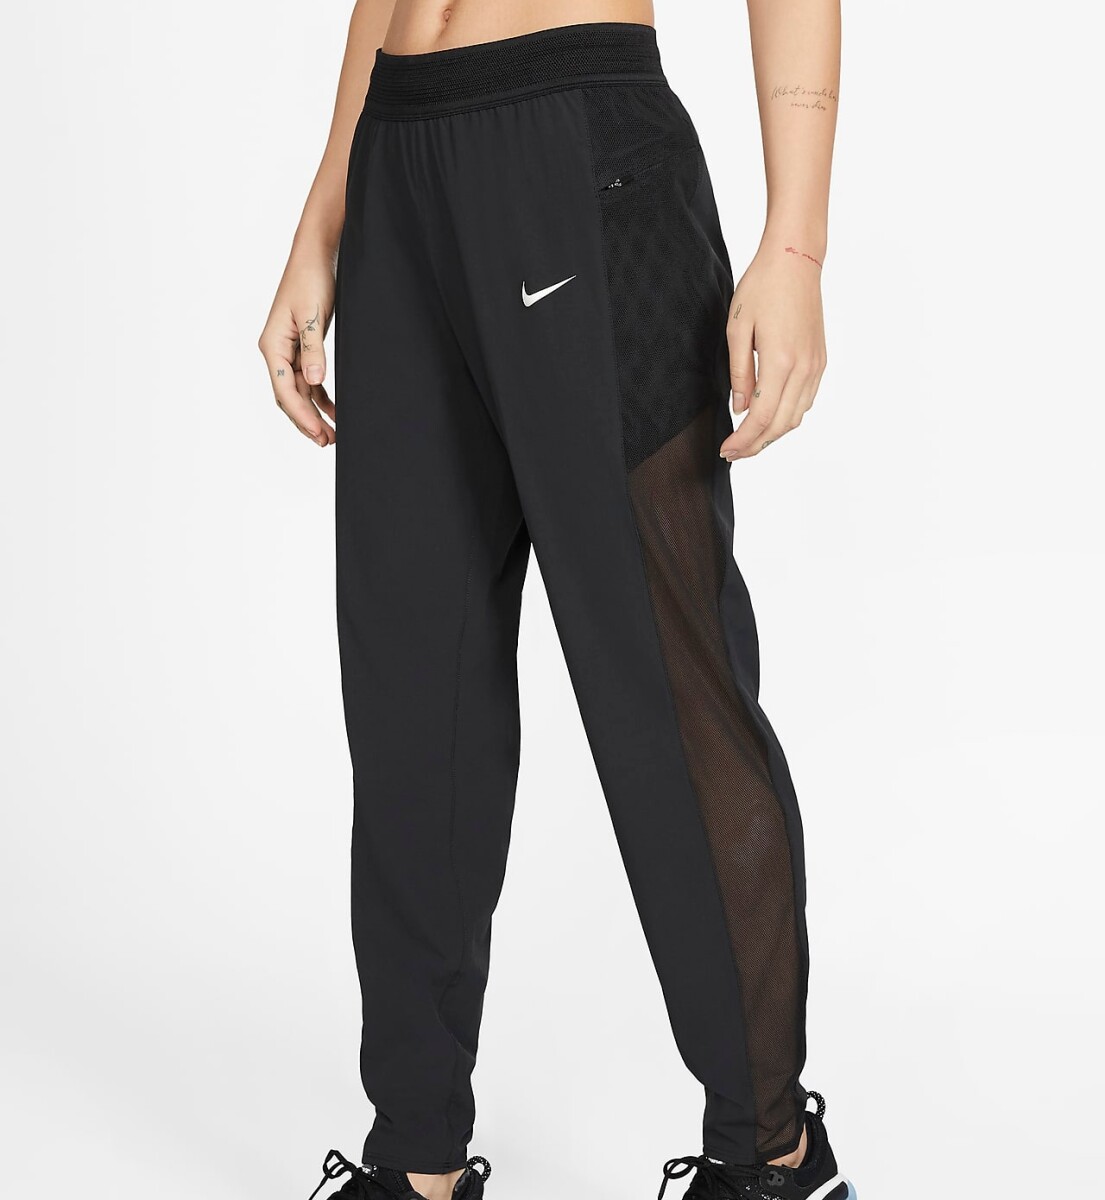 Pantalon Nike Running Dama essntl Runway Negro - Color Único 